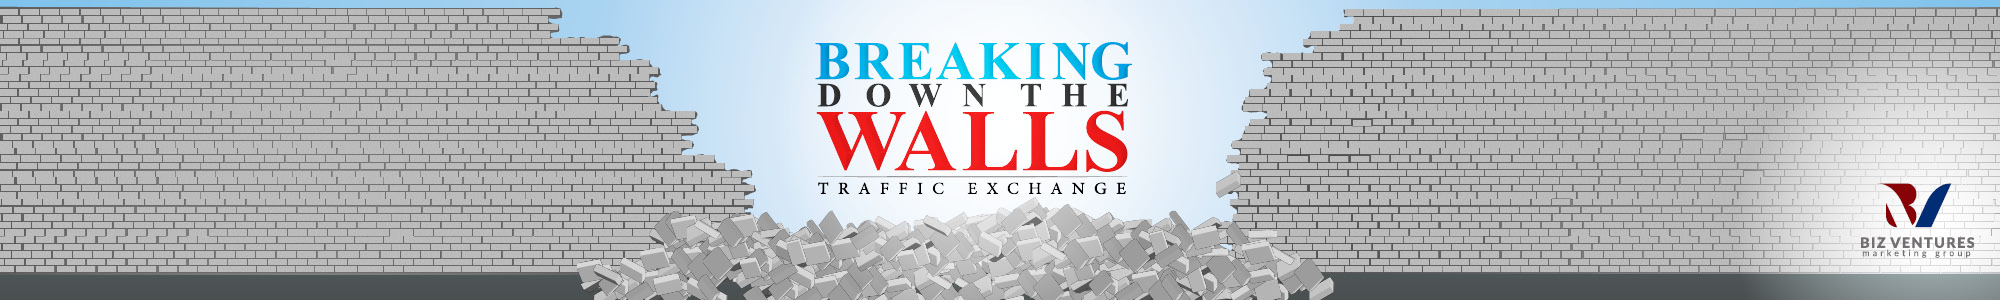 Breaking Down The Walls Traffic Exchange image